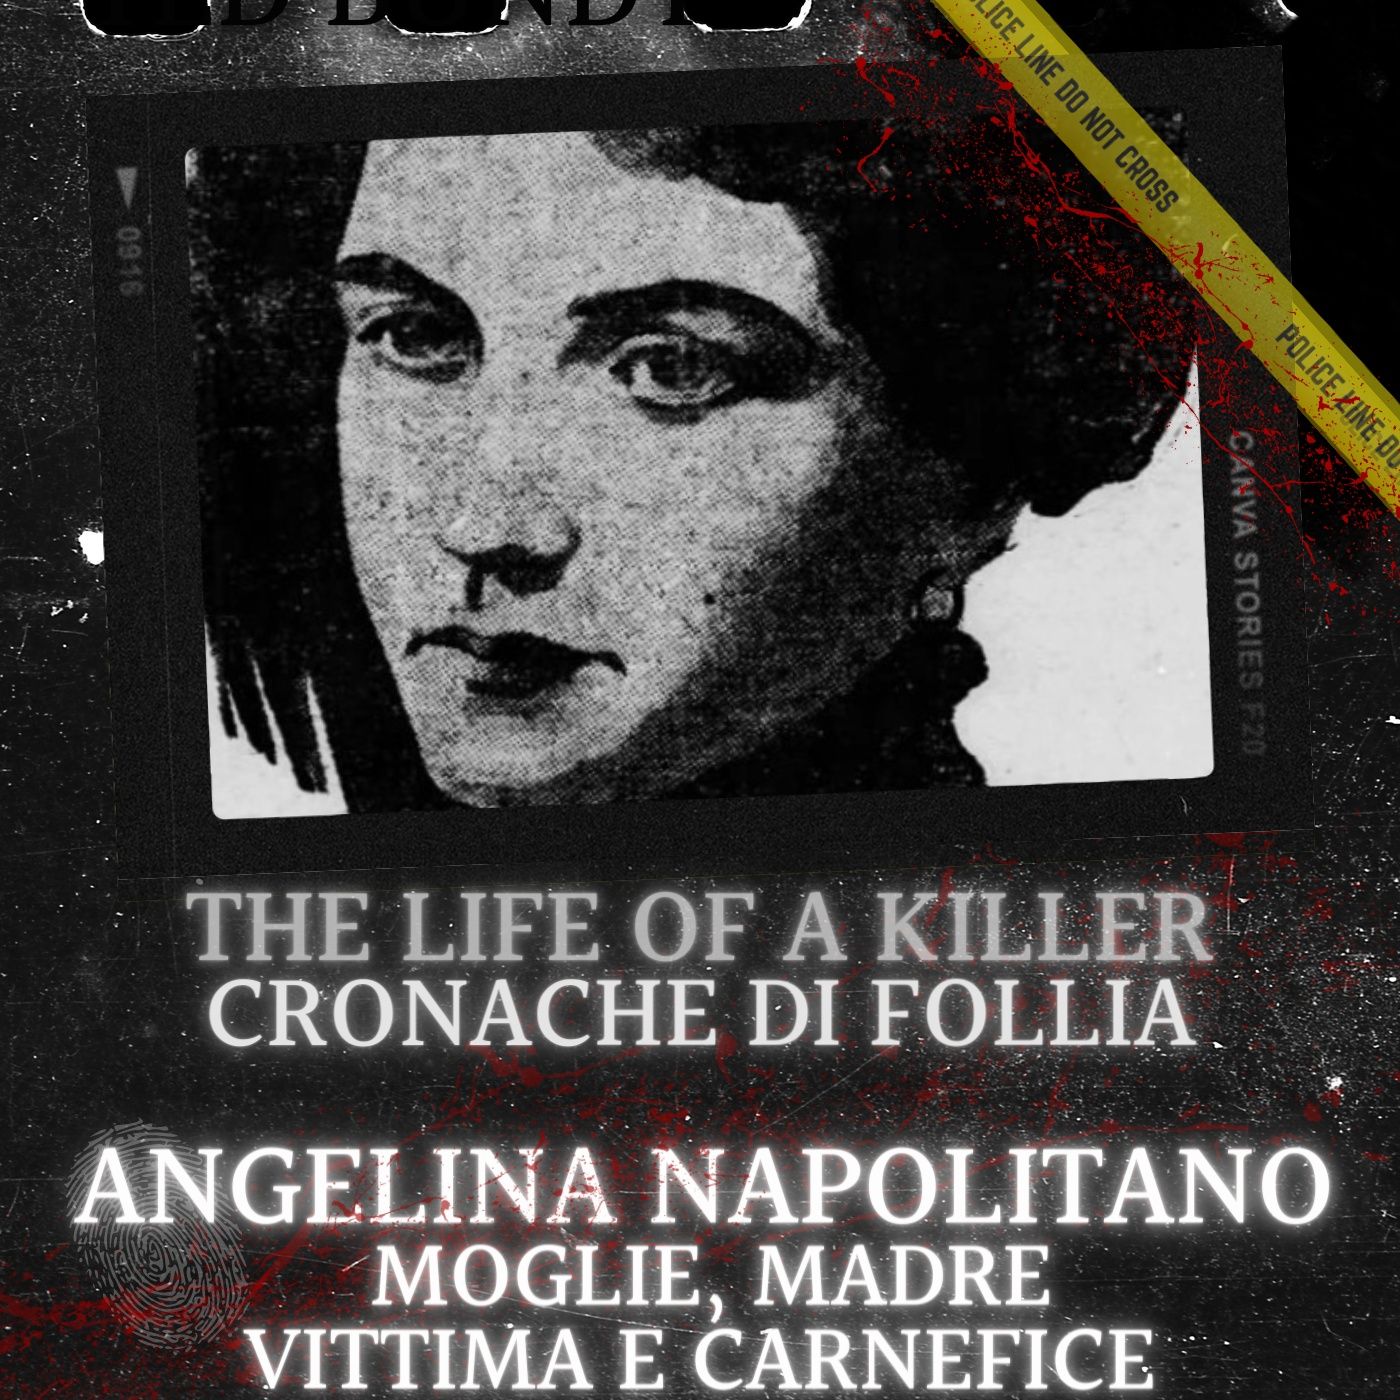 Angelina Napolitano: moglie, madre, vittima e carnefice